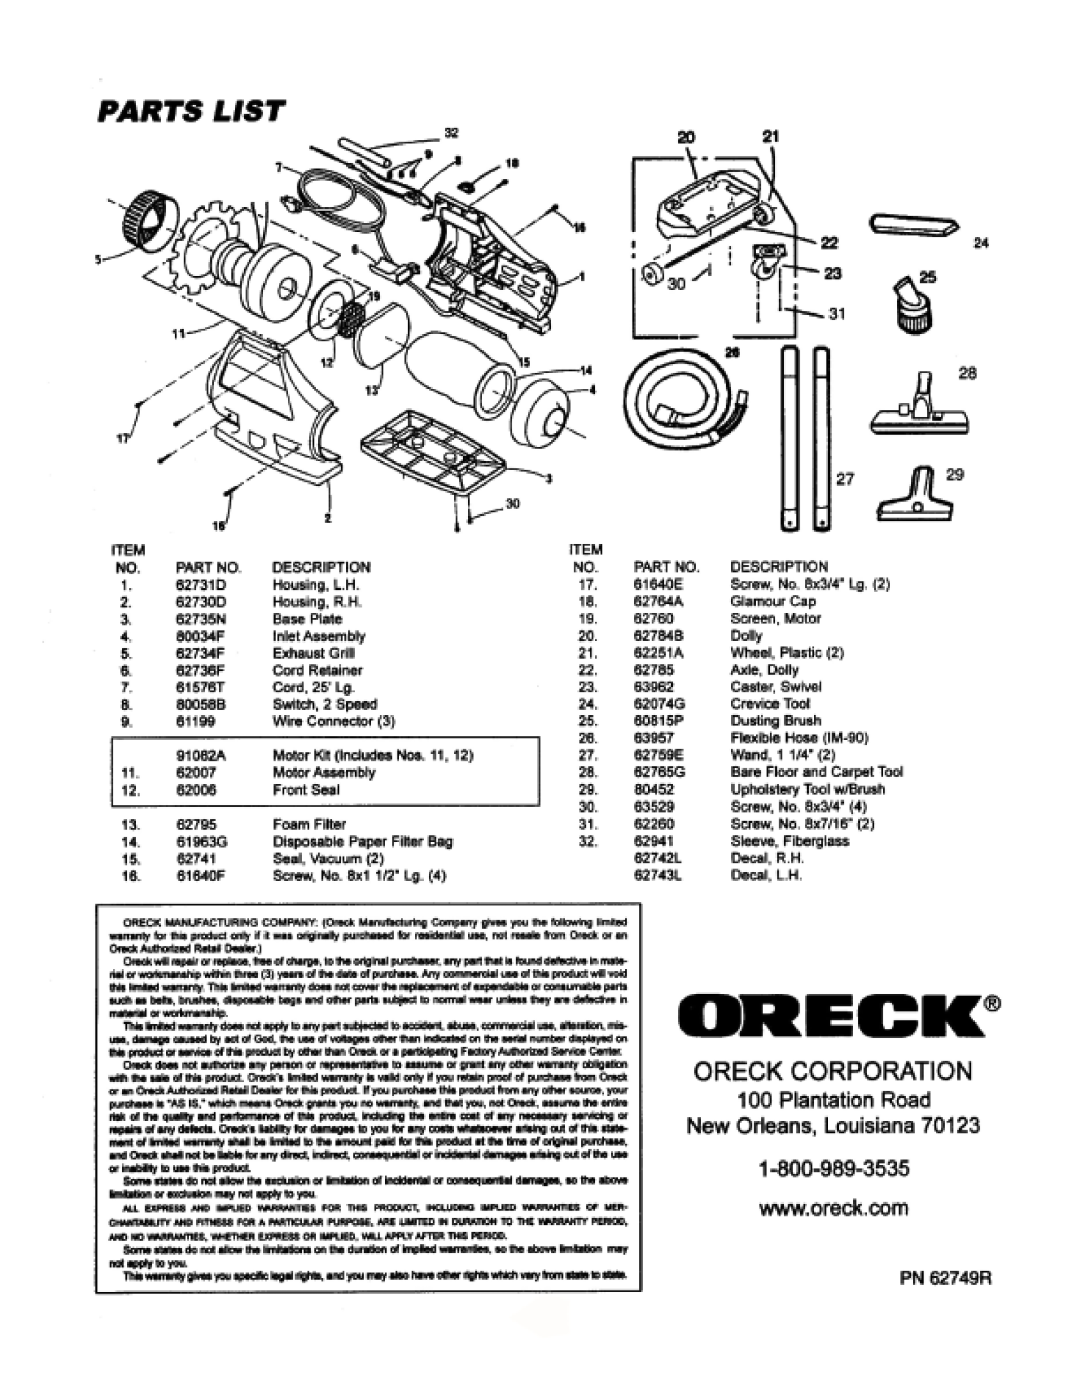 Oreck IM90 manual 